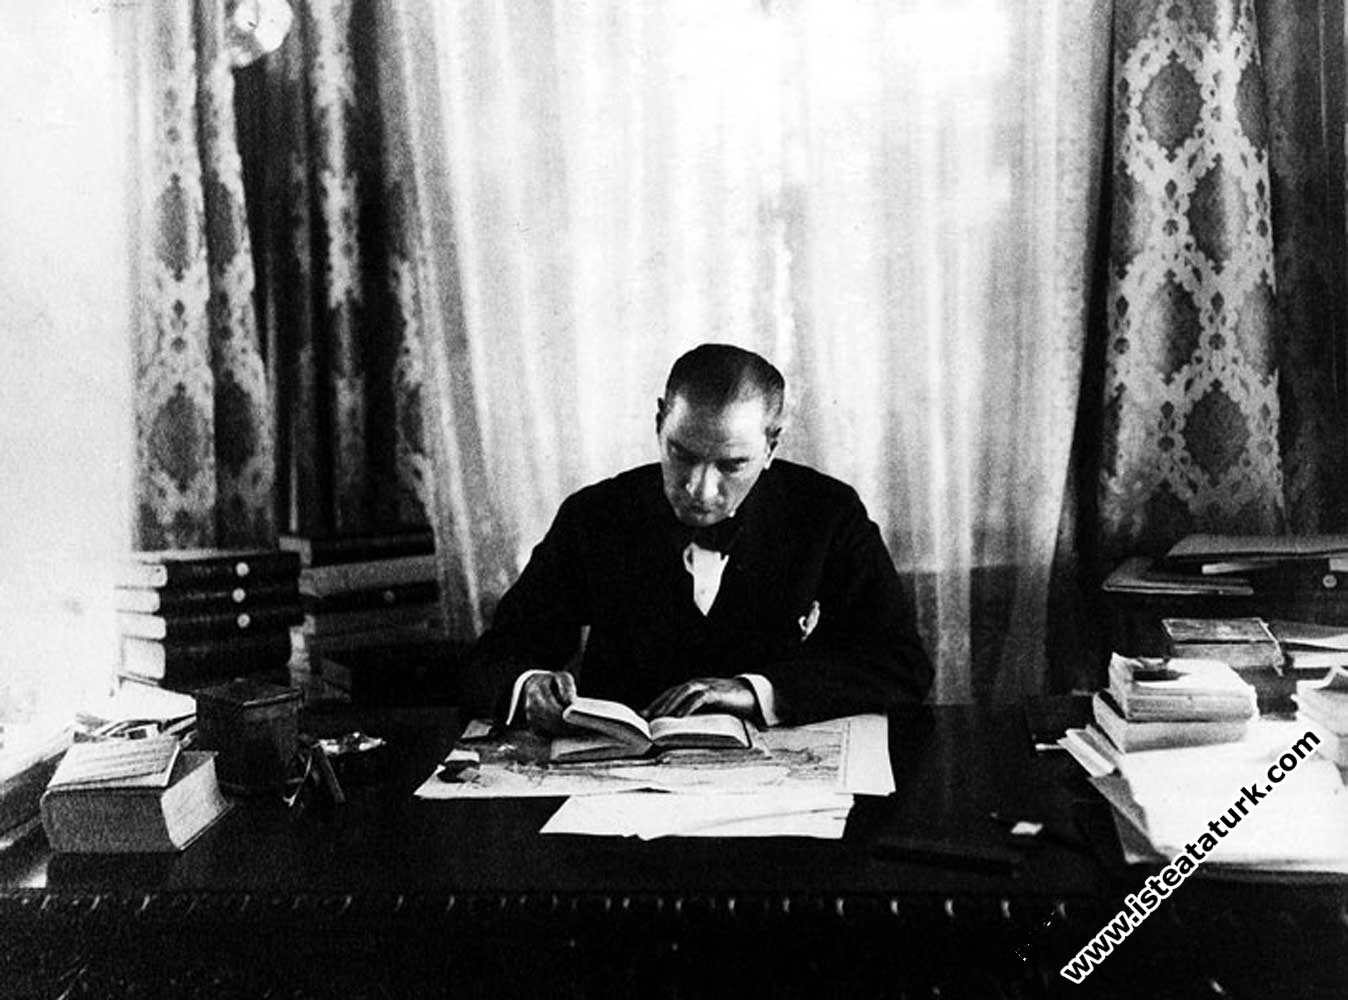 Atatürk and the Book